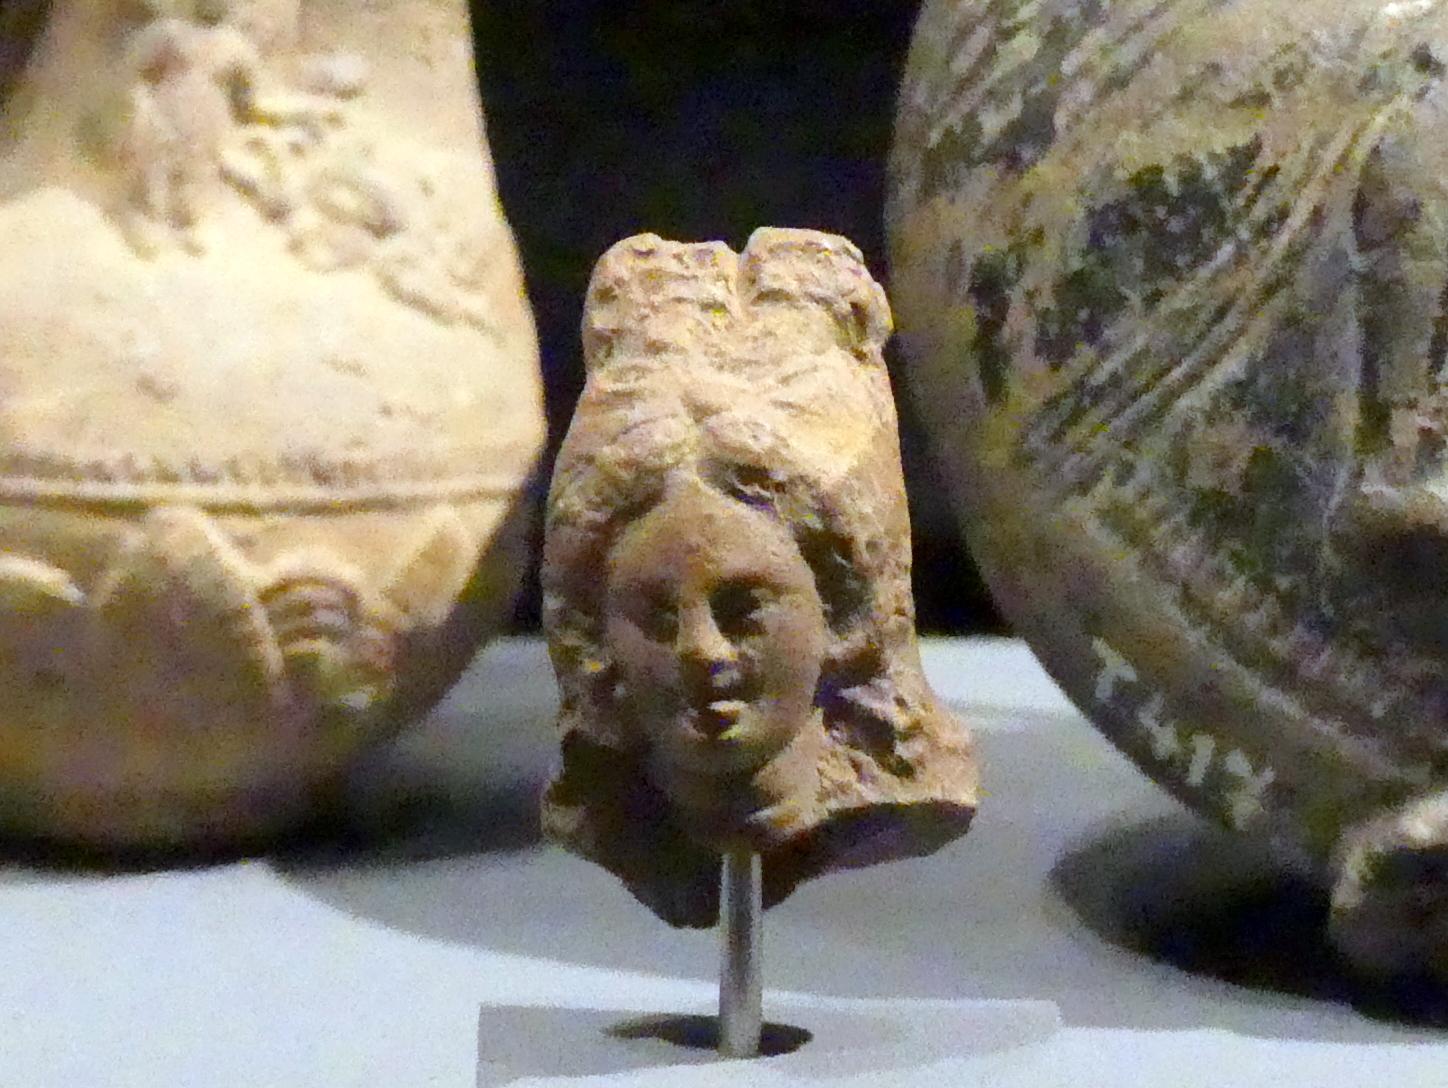 Kopf der Figur einer Göttin, 200 v. Chr. - 200 n. Chr., Bild 1/2